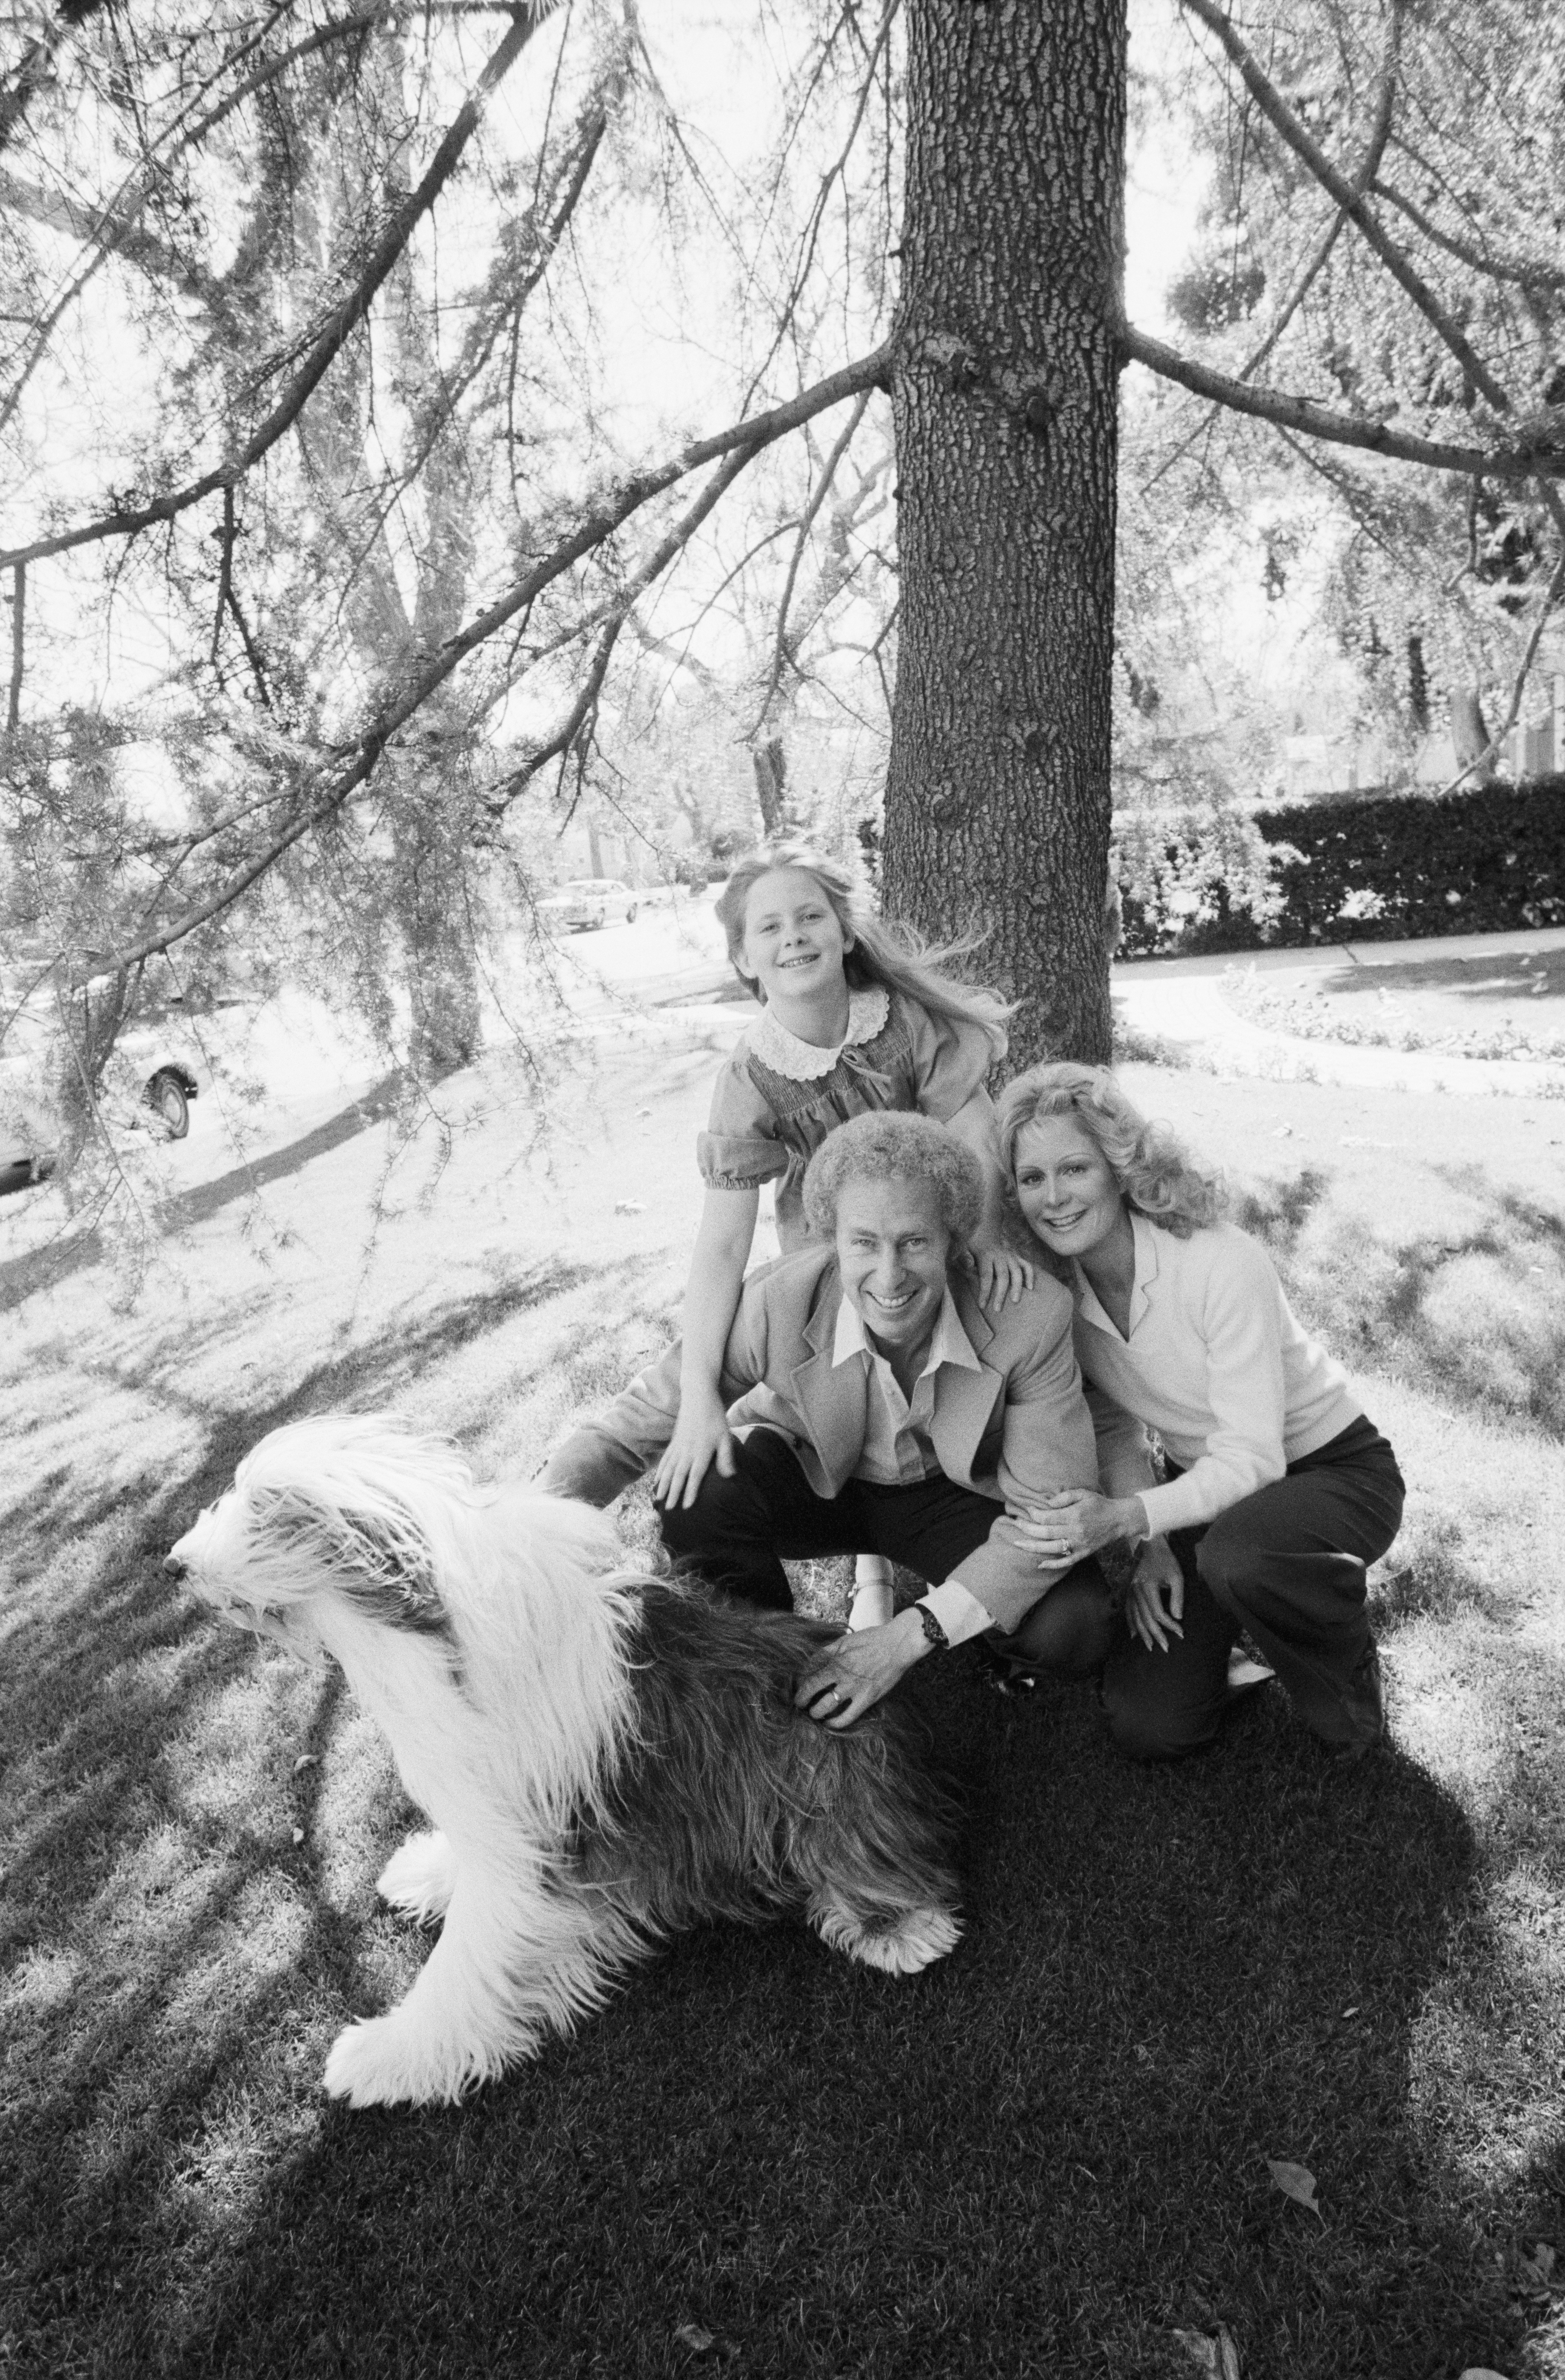 Joan Van Ark, John Marshall et Vanessa Marshall photographiés le 22 janvier 1980 | Sources : Getty Images